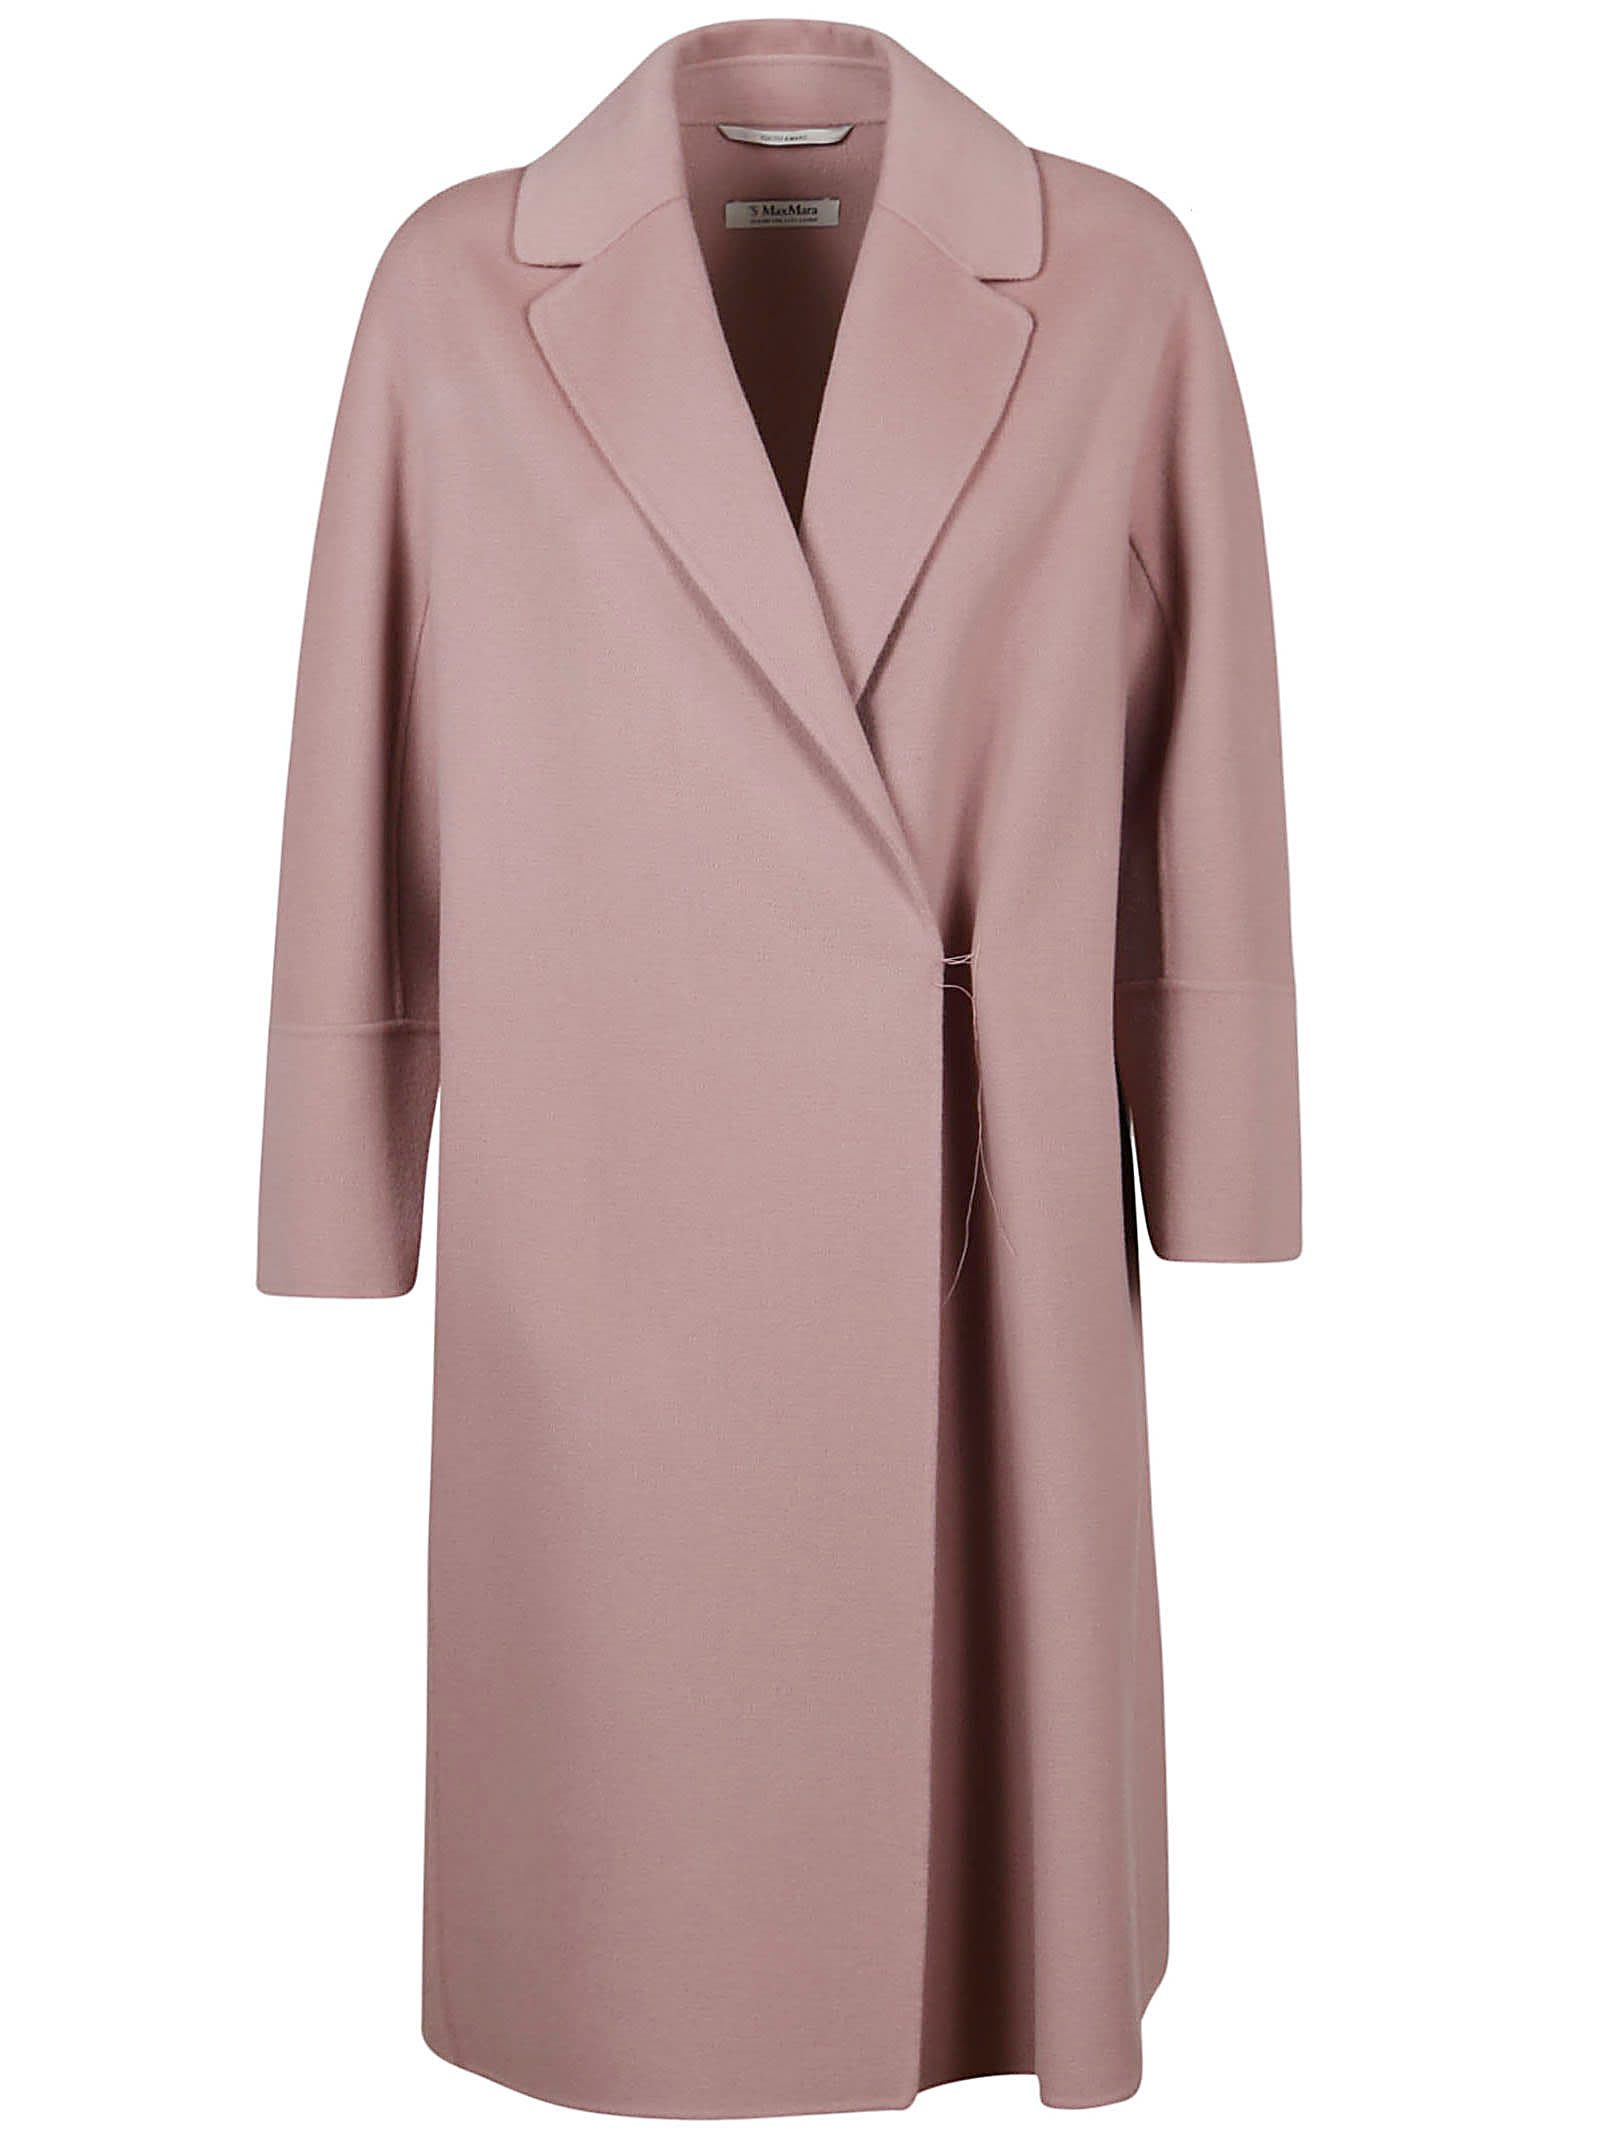 S Max Mara Pink Wool Coat